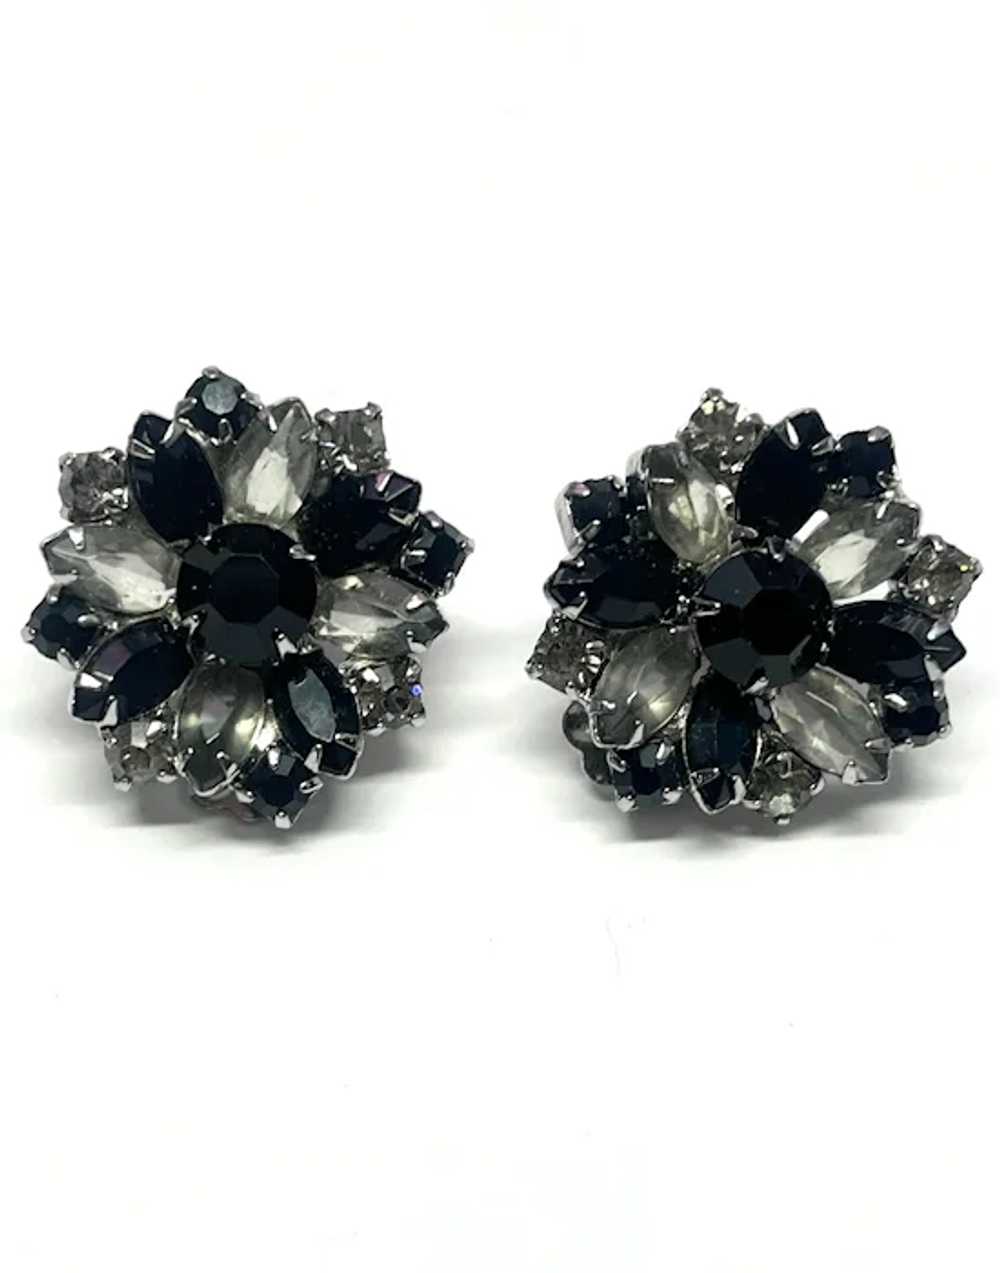 Vintage Black Glass Flower Earrings - image 4